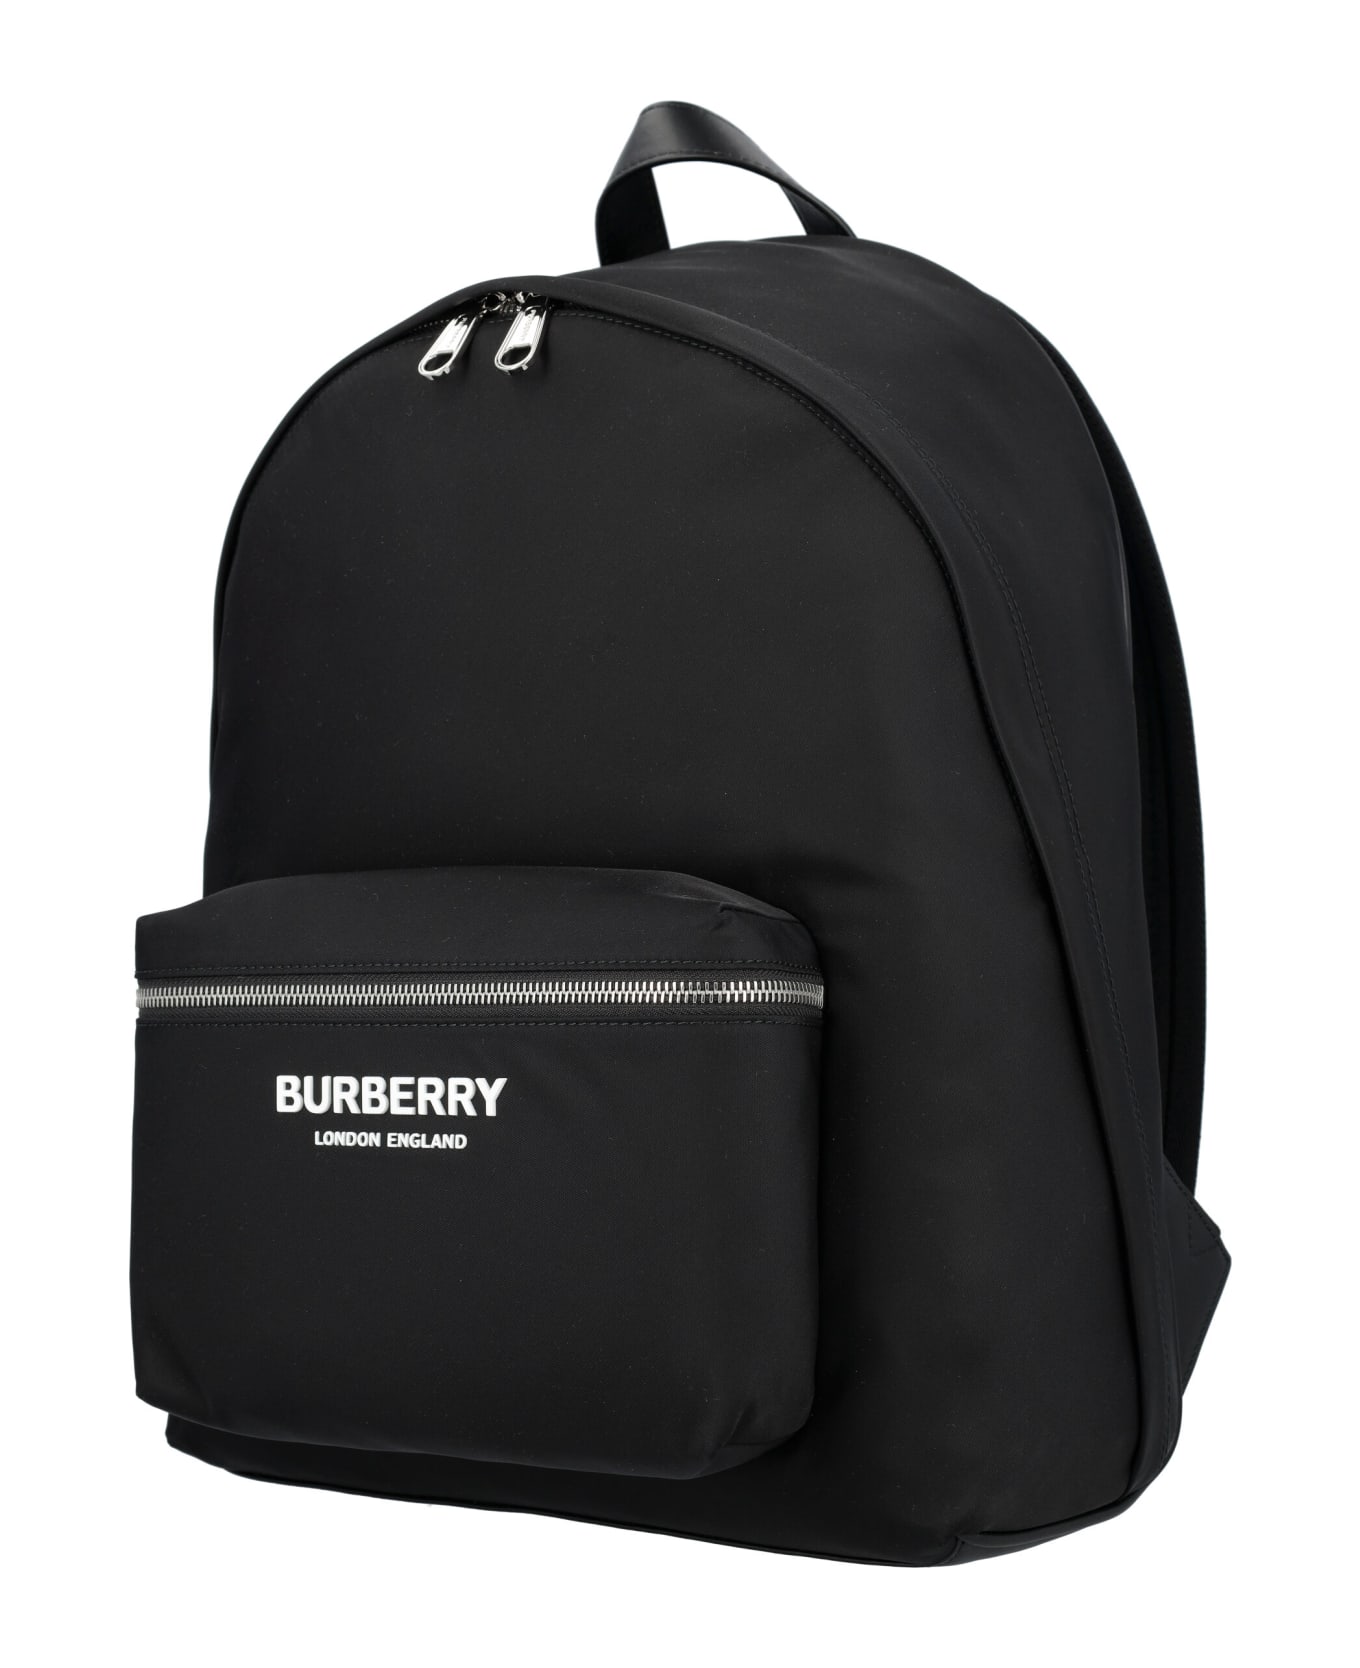 Burberry London Nylon Backpack - BLACK